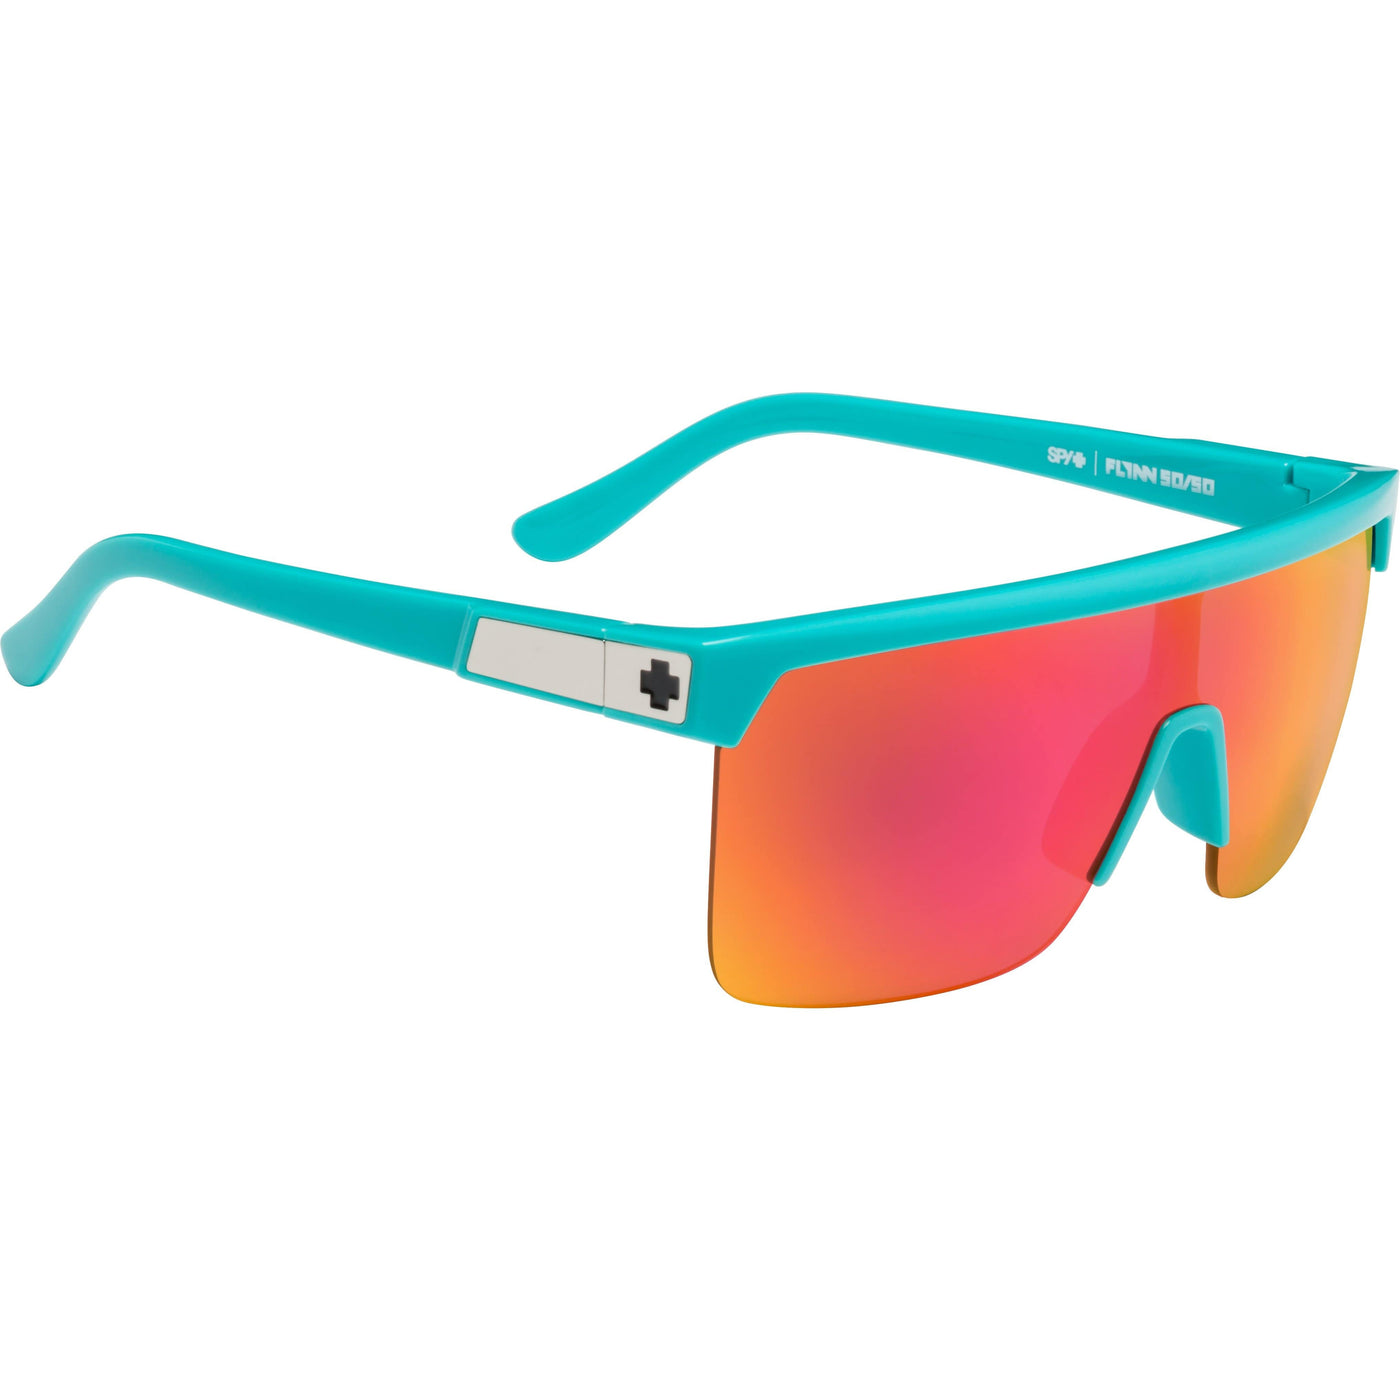 SPY Flynn 5050 Sunglasses - pink/teal